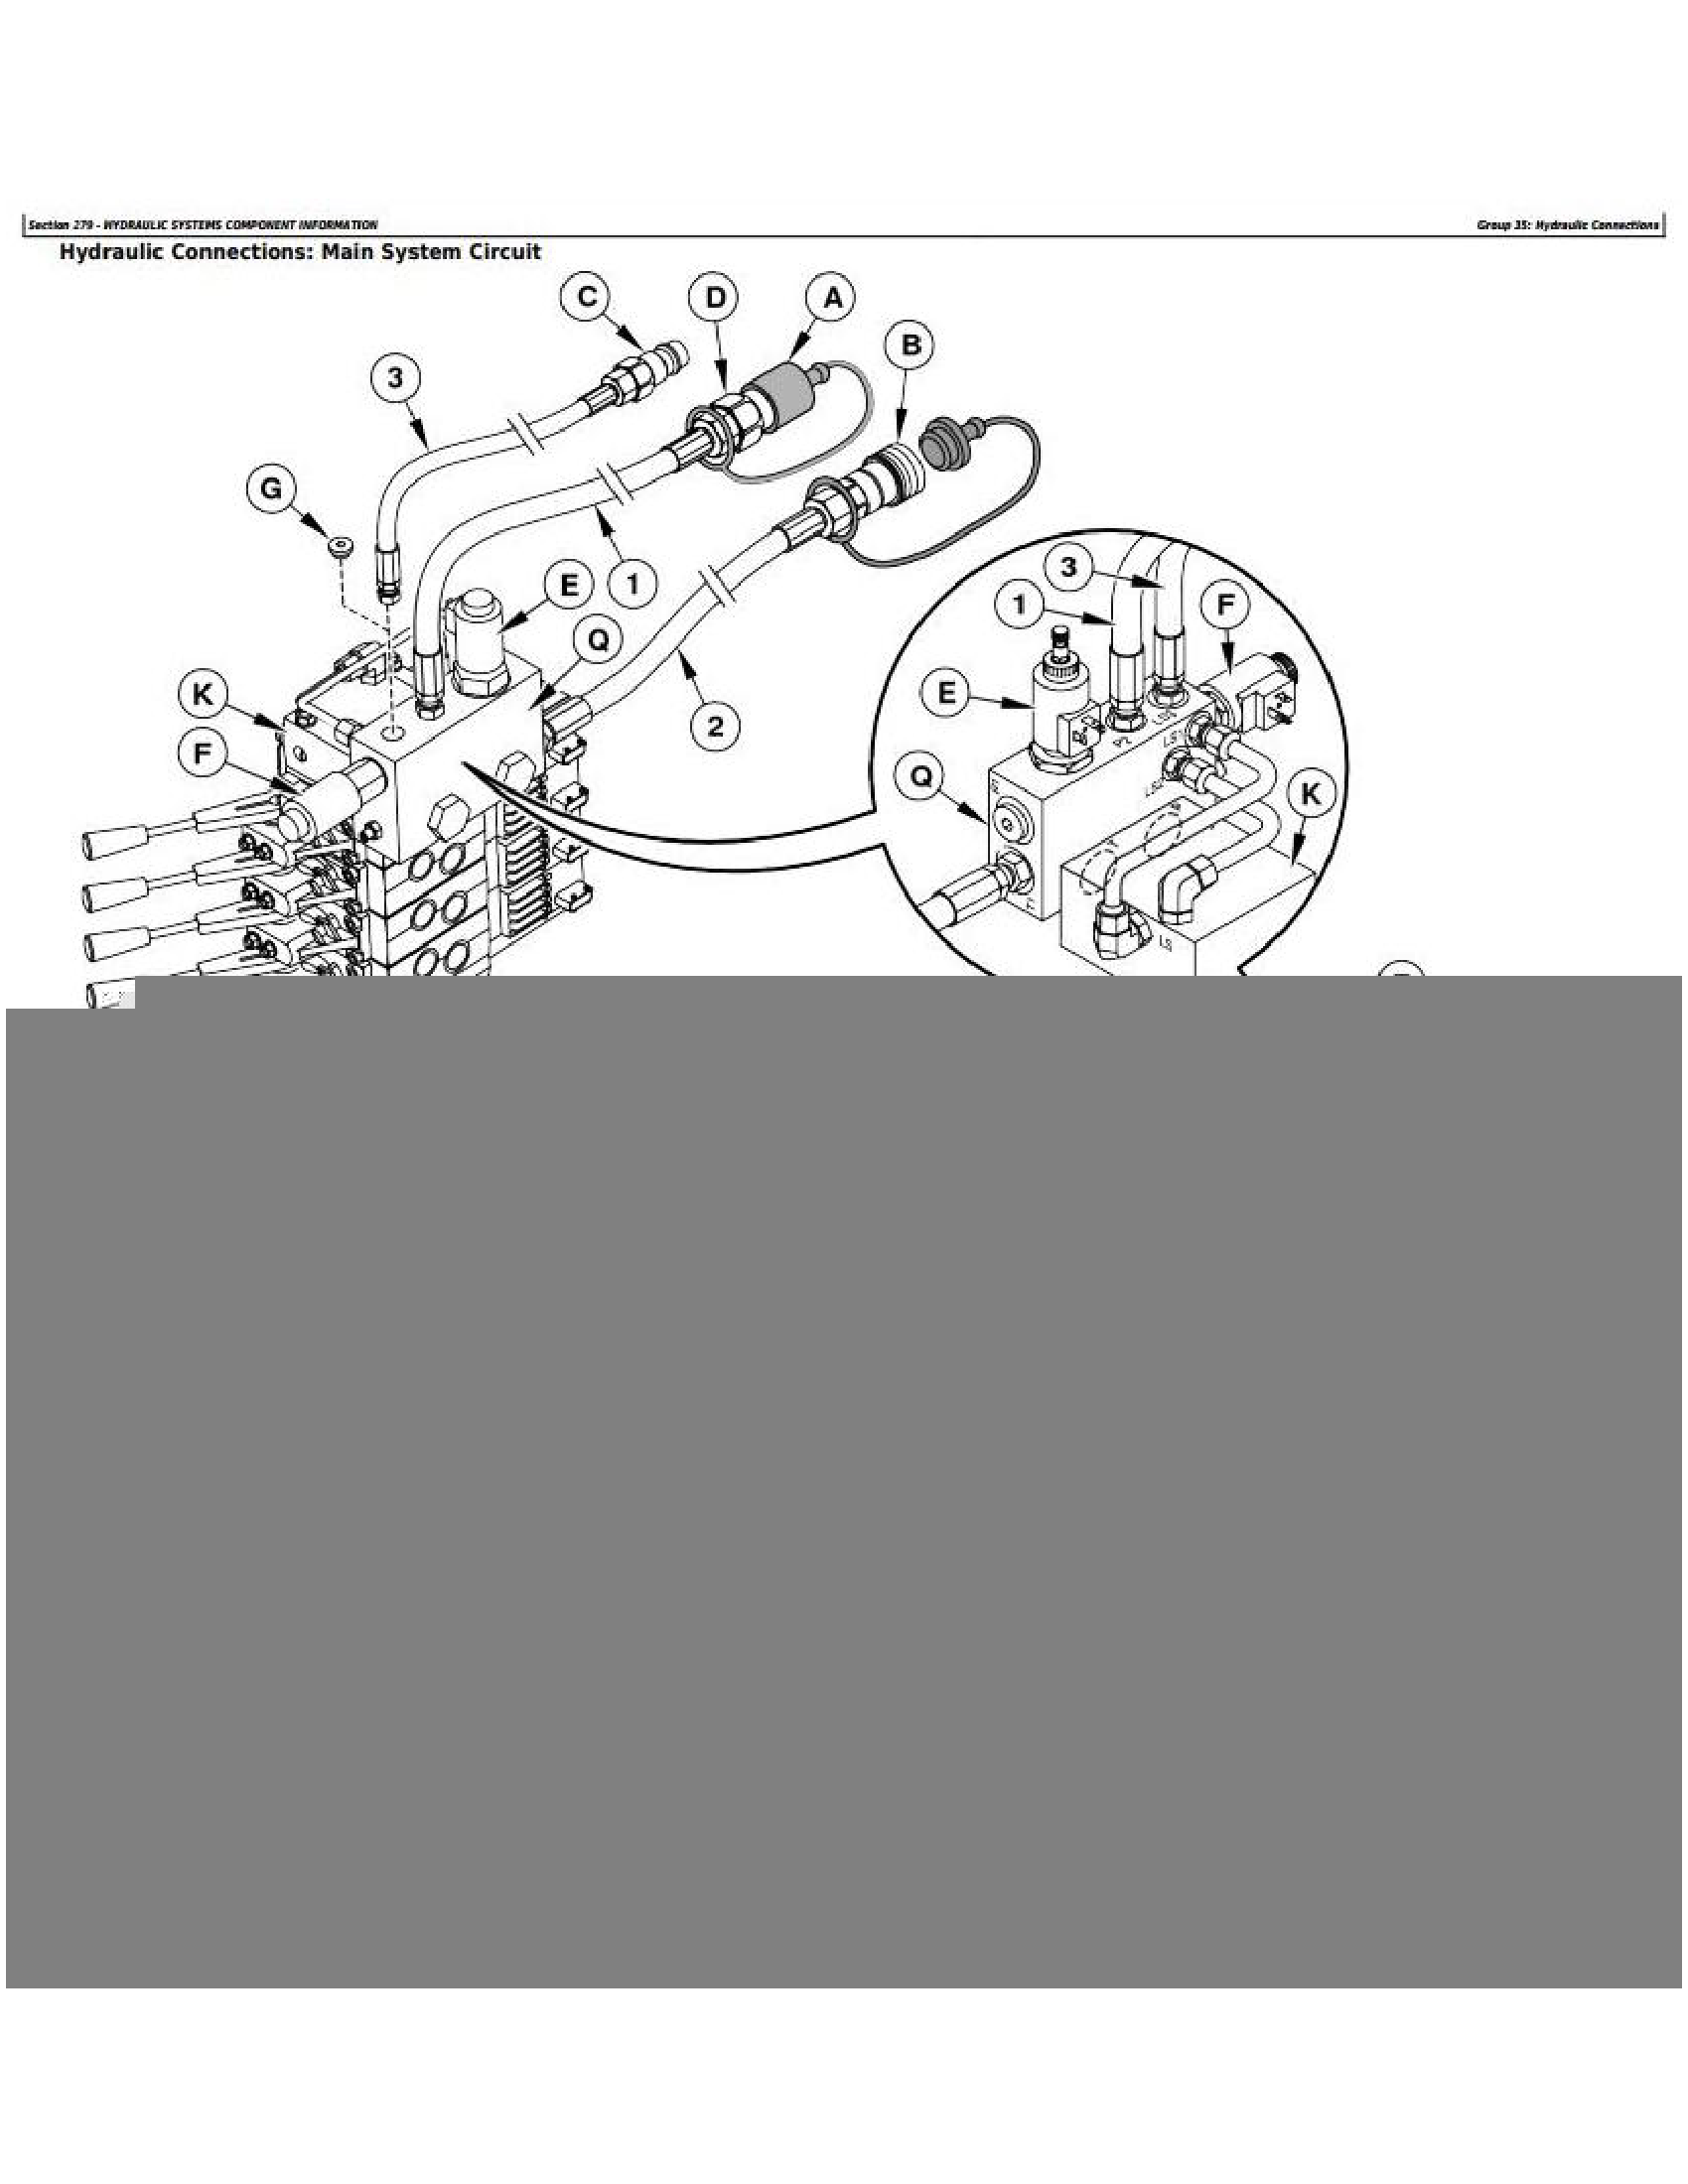 John Deere 8410T manual pdf